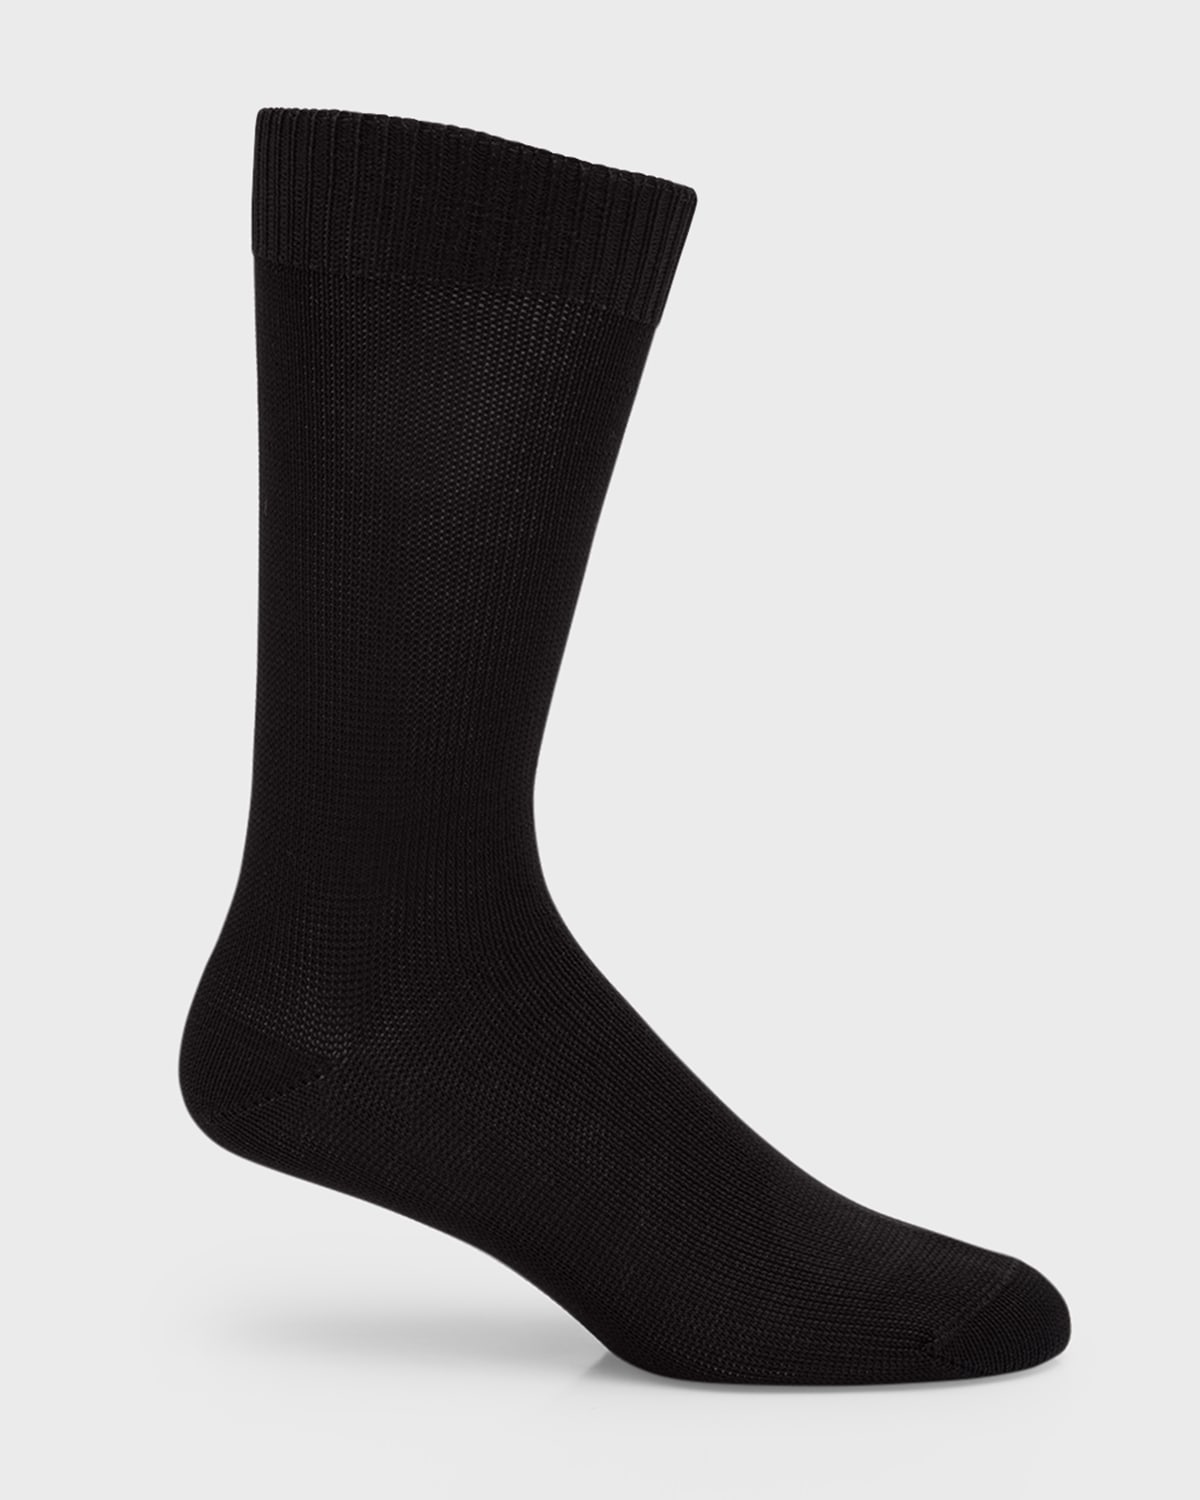 Neiman Marcus Men's Casual Knit Crew Socks In Black